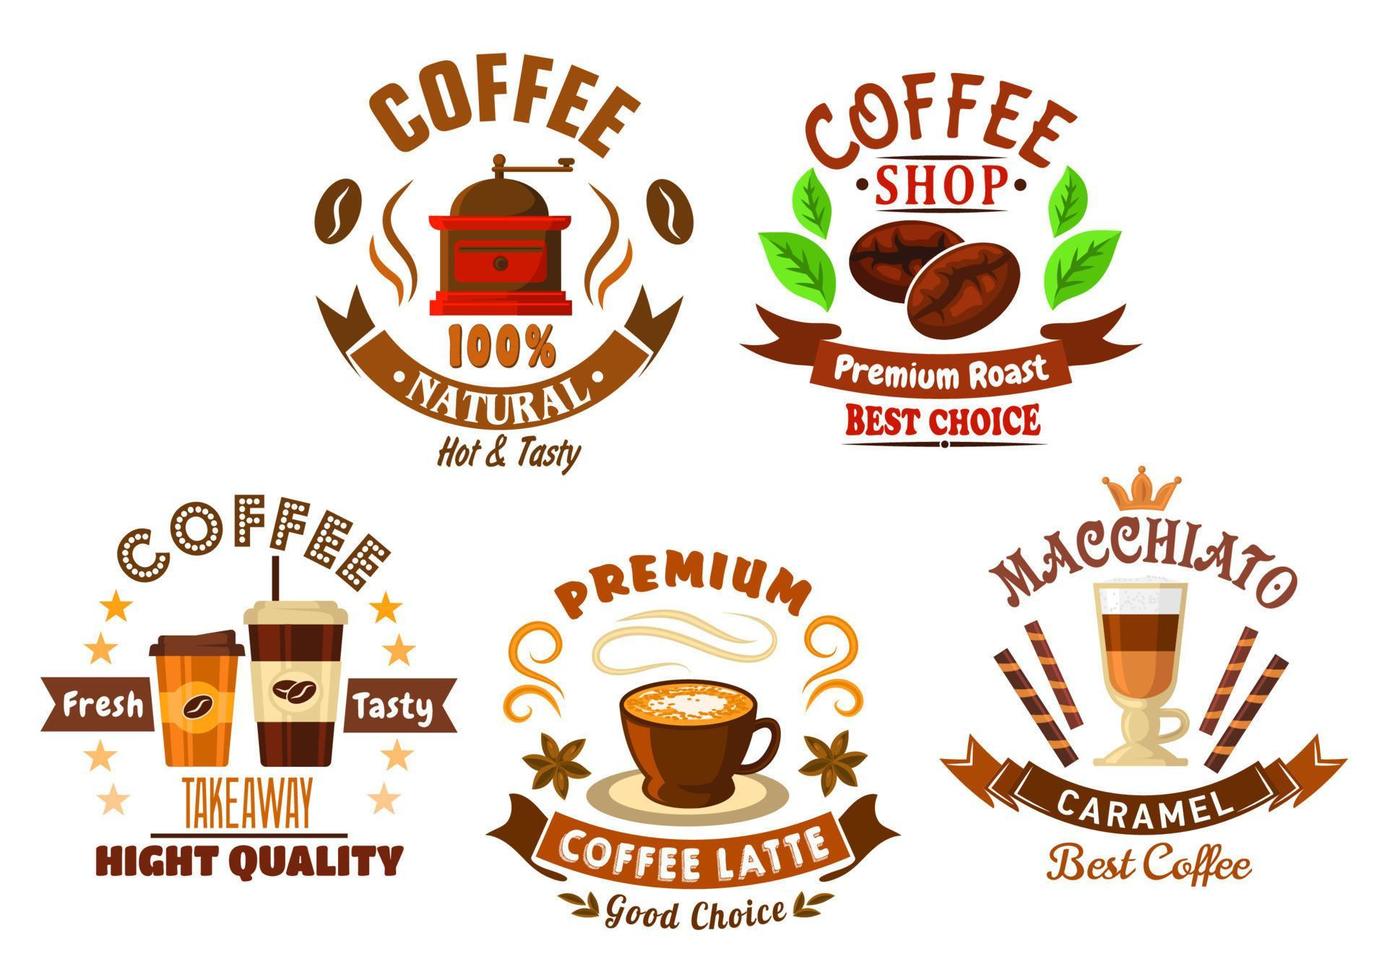 Coffee shop design elements in cartoon style vector